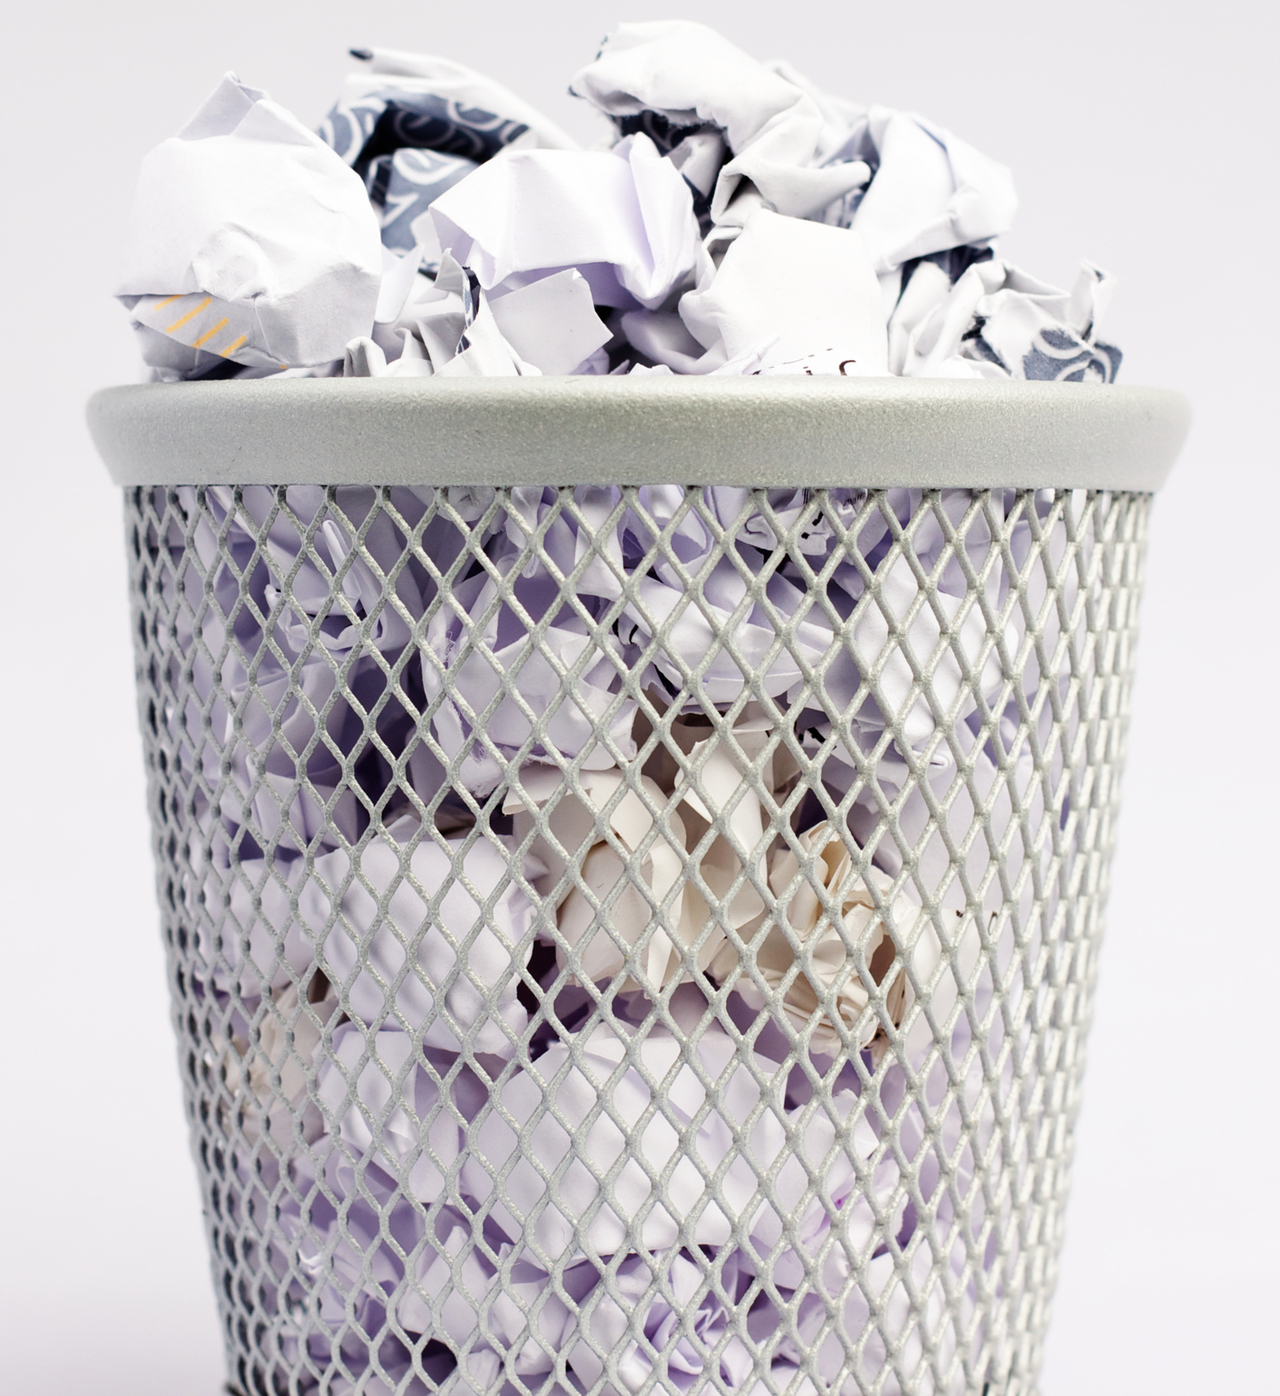 Wastepaper basket filled with paper